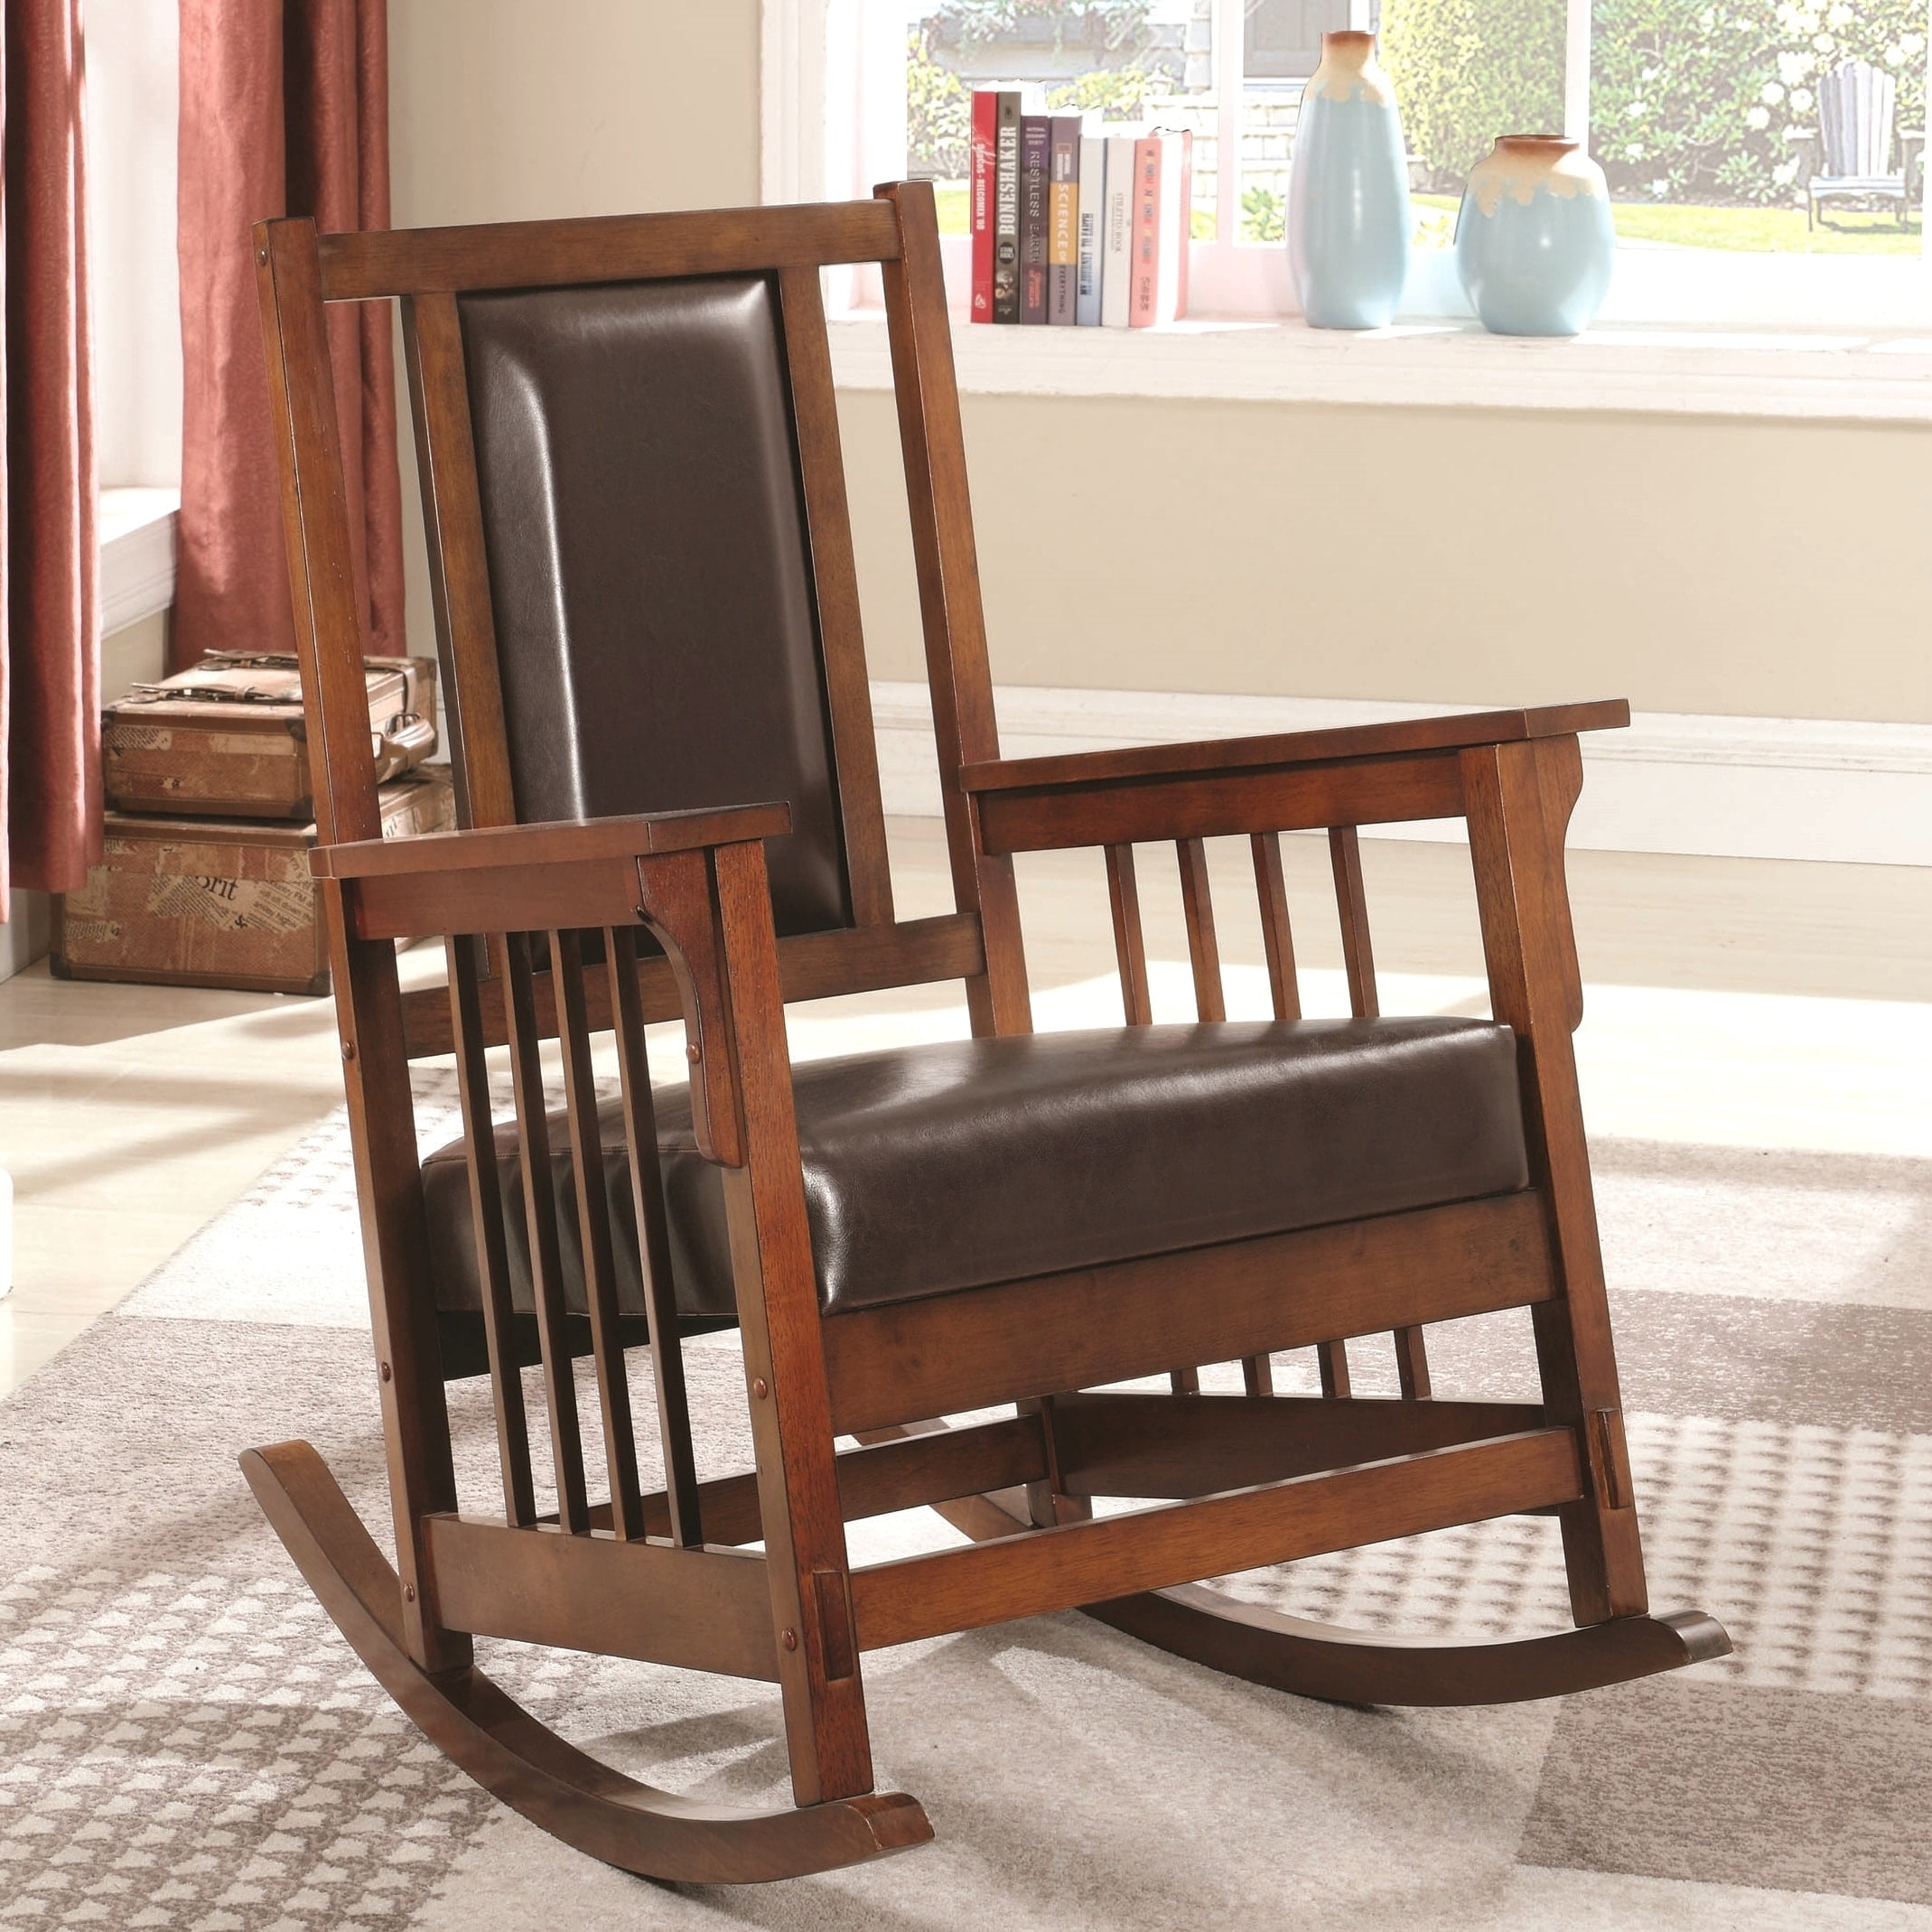 A Line Furniture Kapelner Luxury Mission Style Rocking Chair Brown